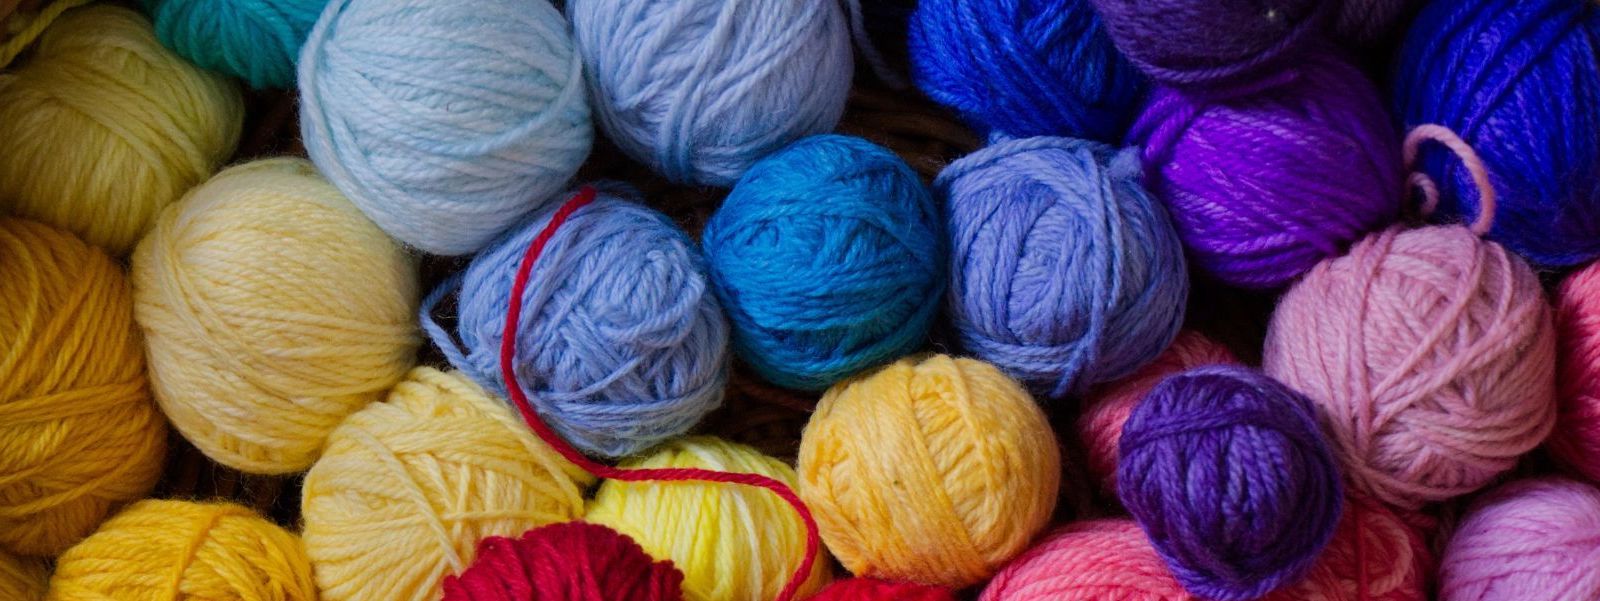 Craft2U - Yarn, Knitting, Crochet, Needlework Supplies - Shop now